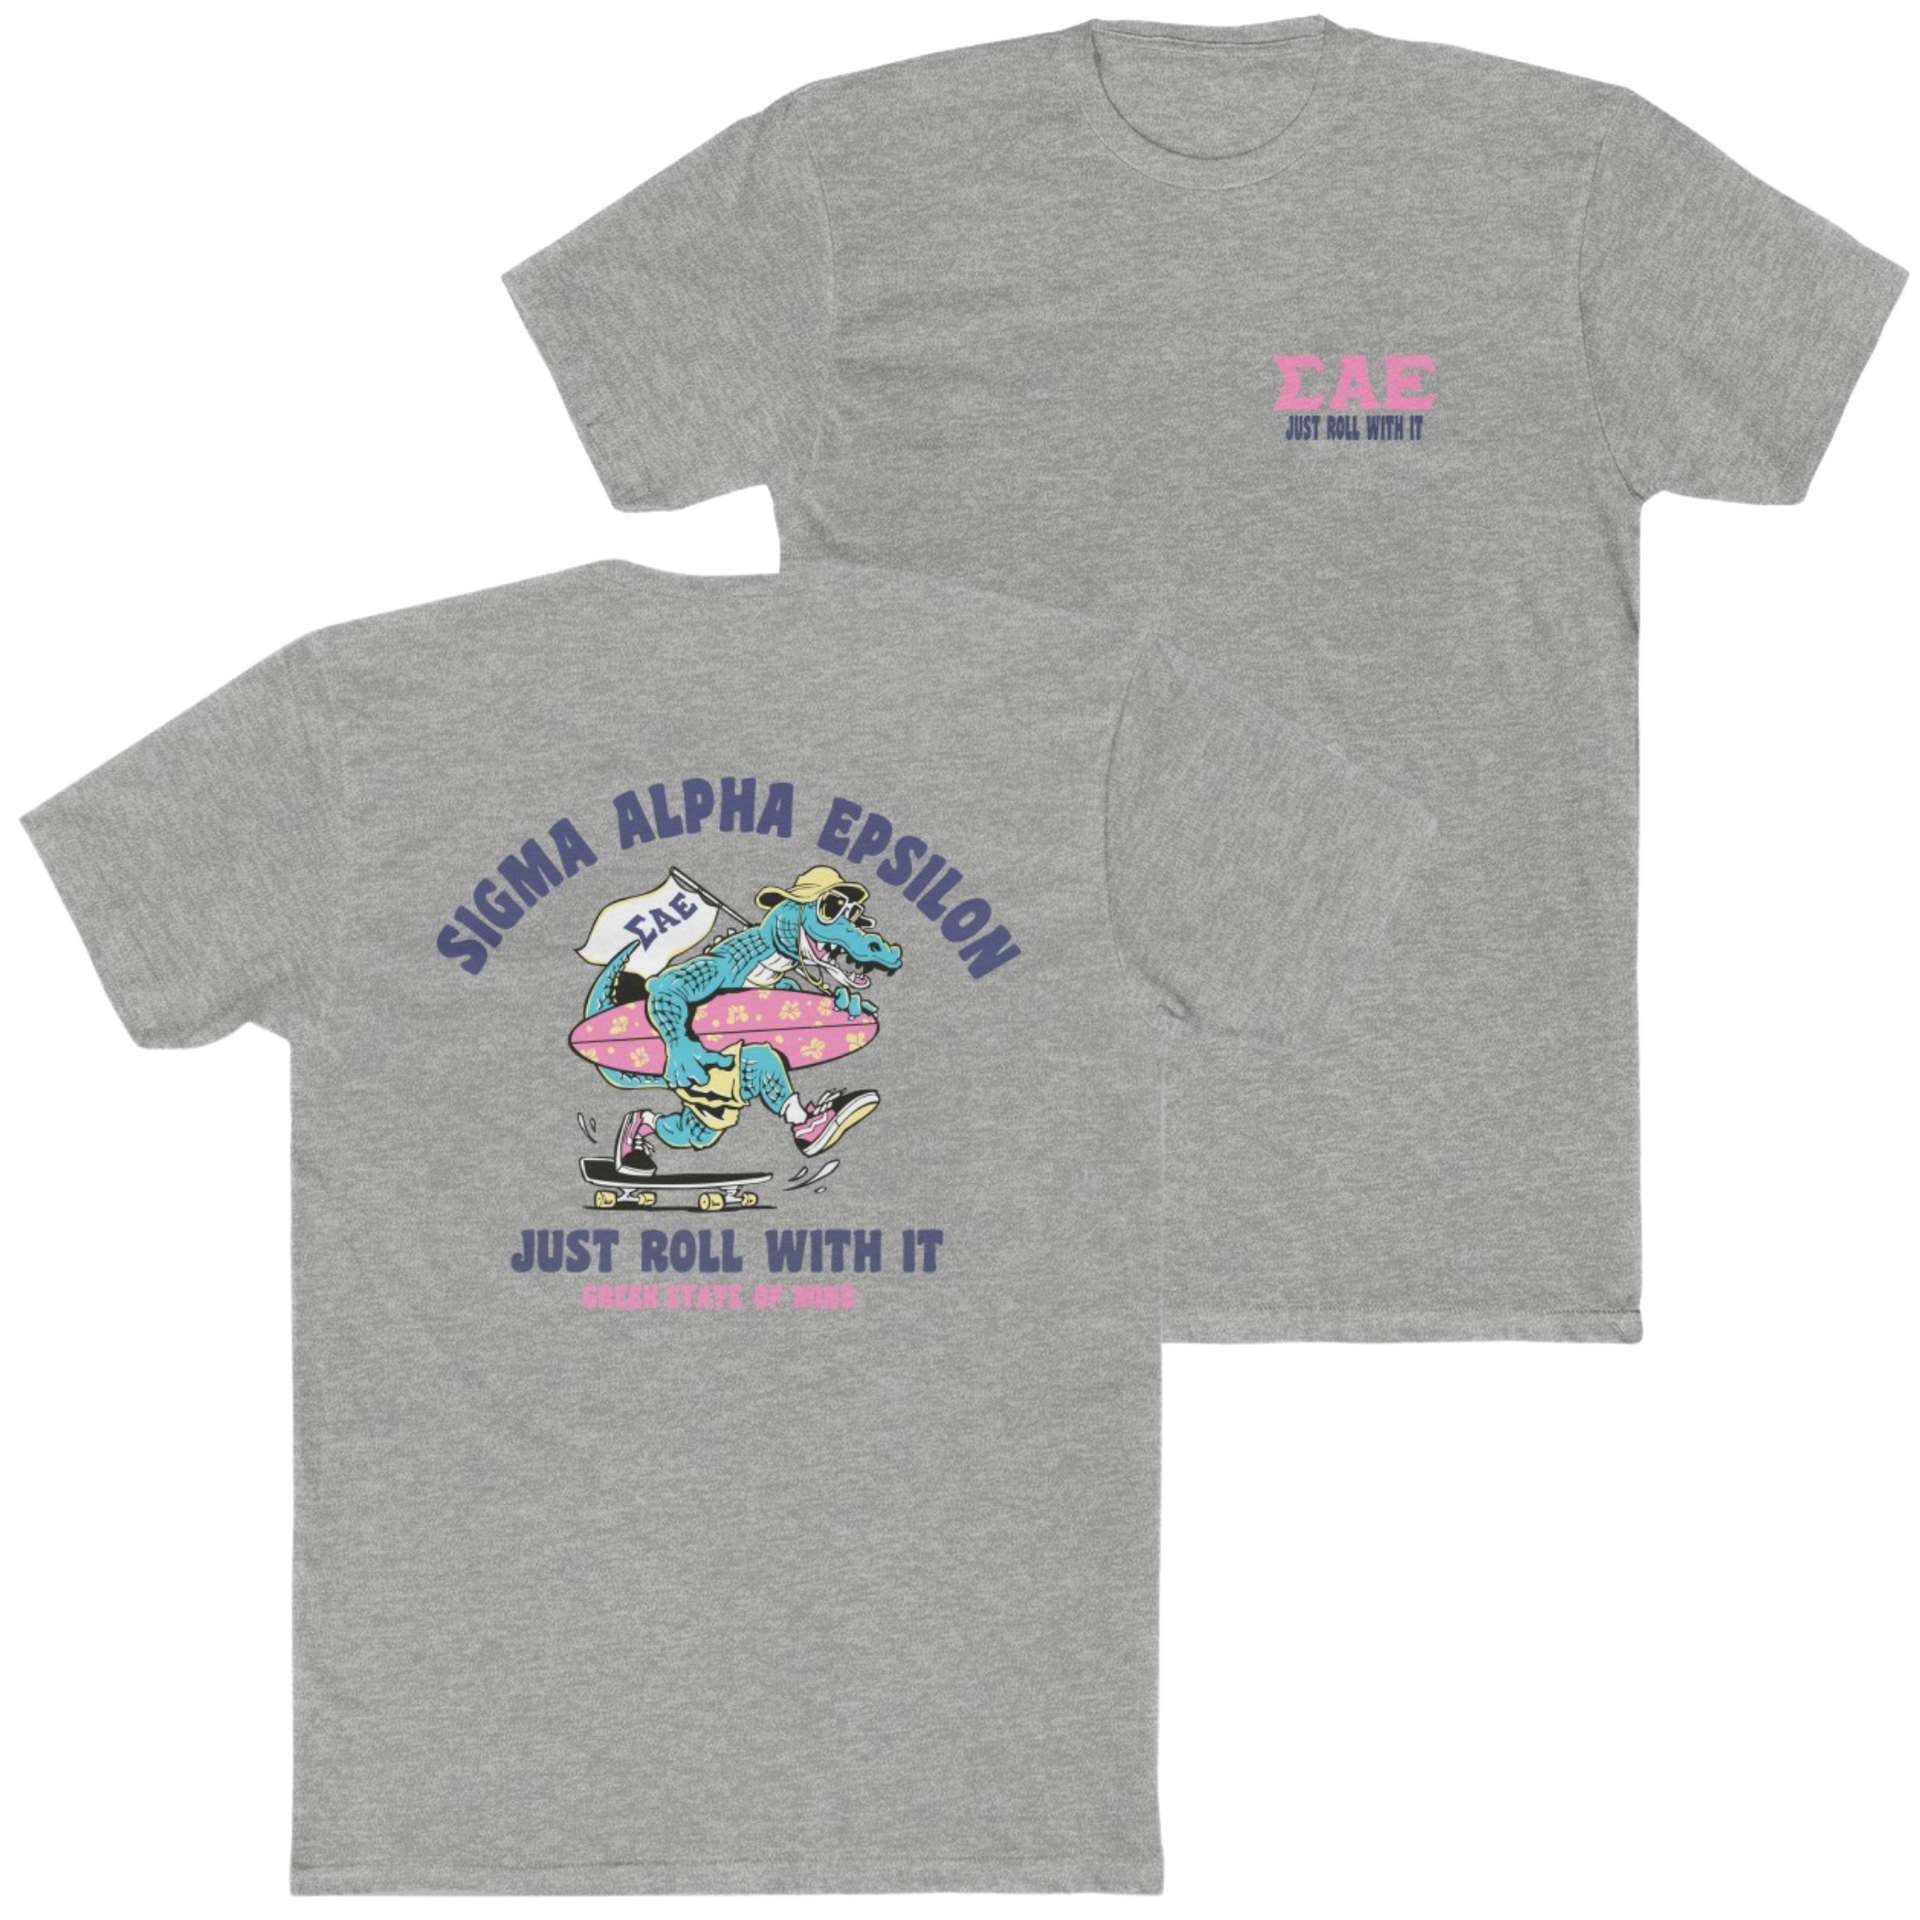 Grey Sigma Alpha Epsilon Graphic T-Shirt | Alligator Skater | Sigma Alpha Epsilon Clothing and Merchandise